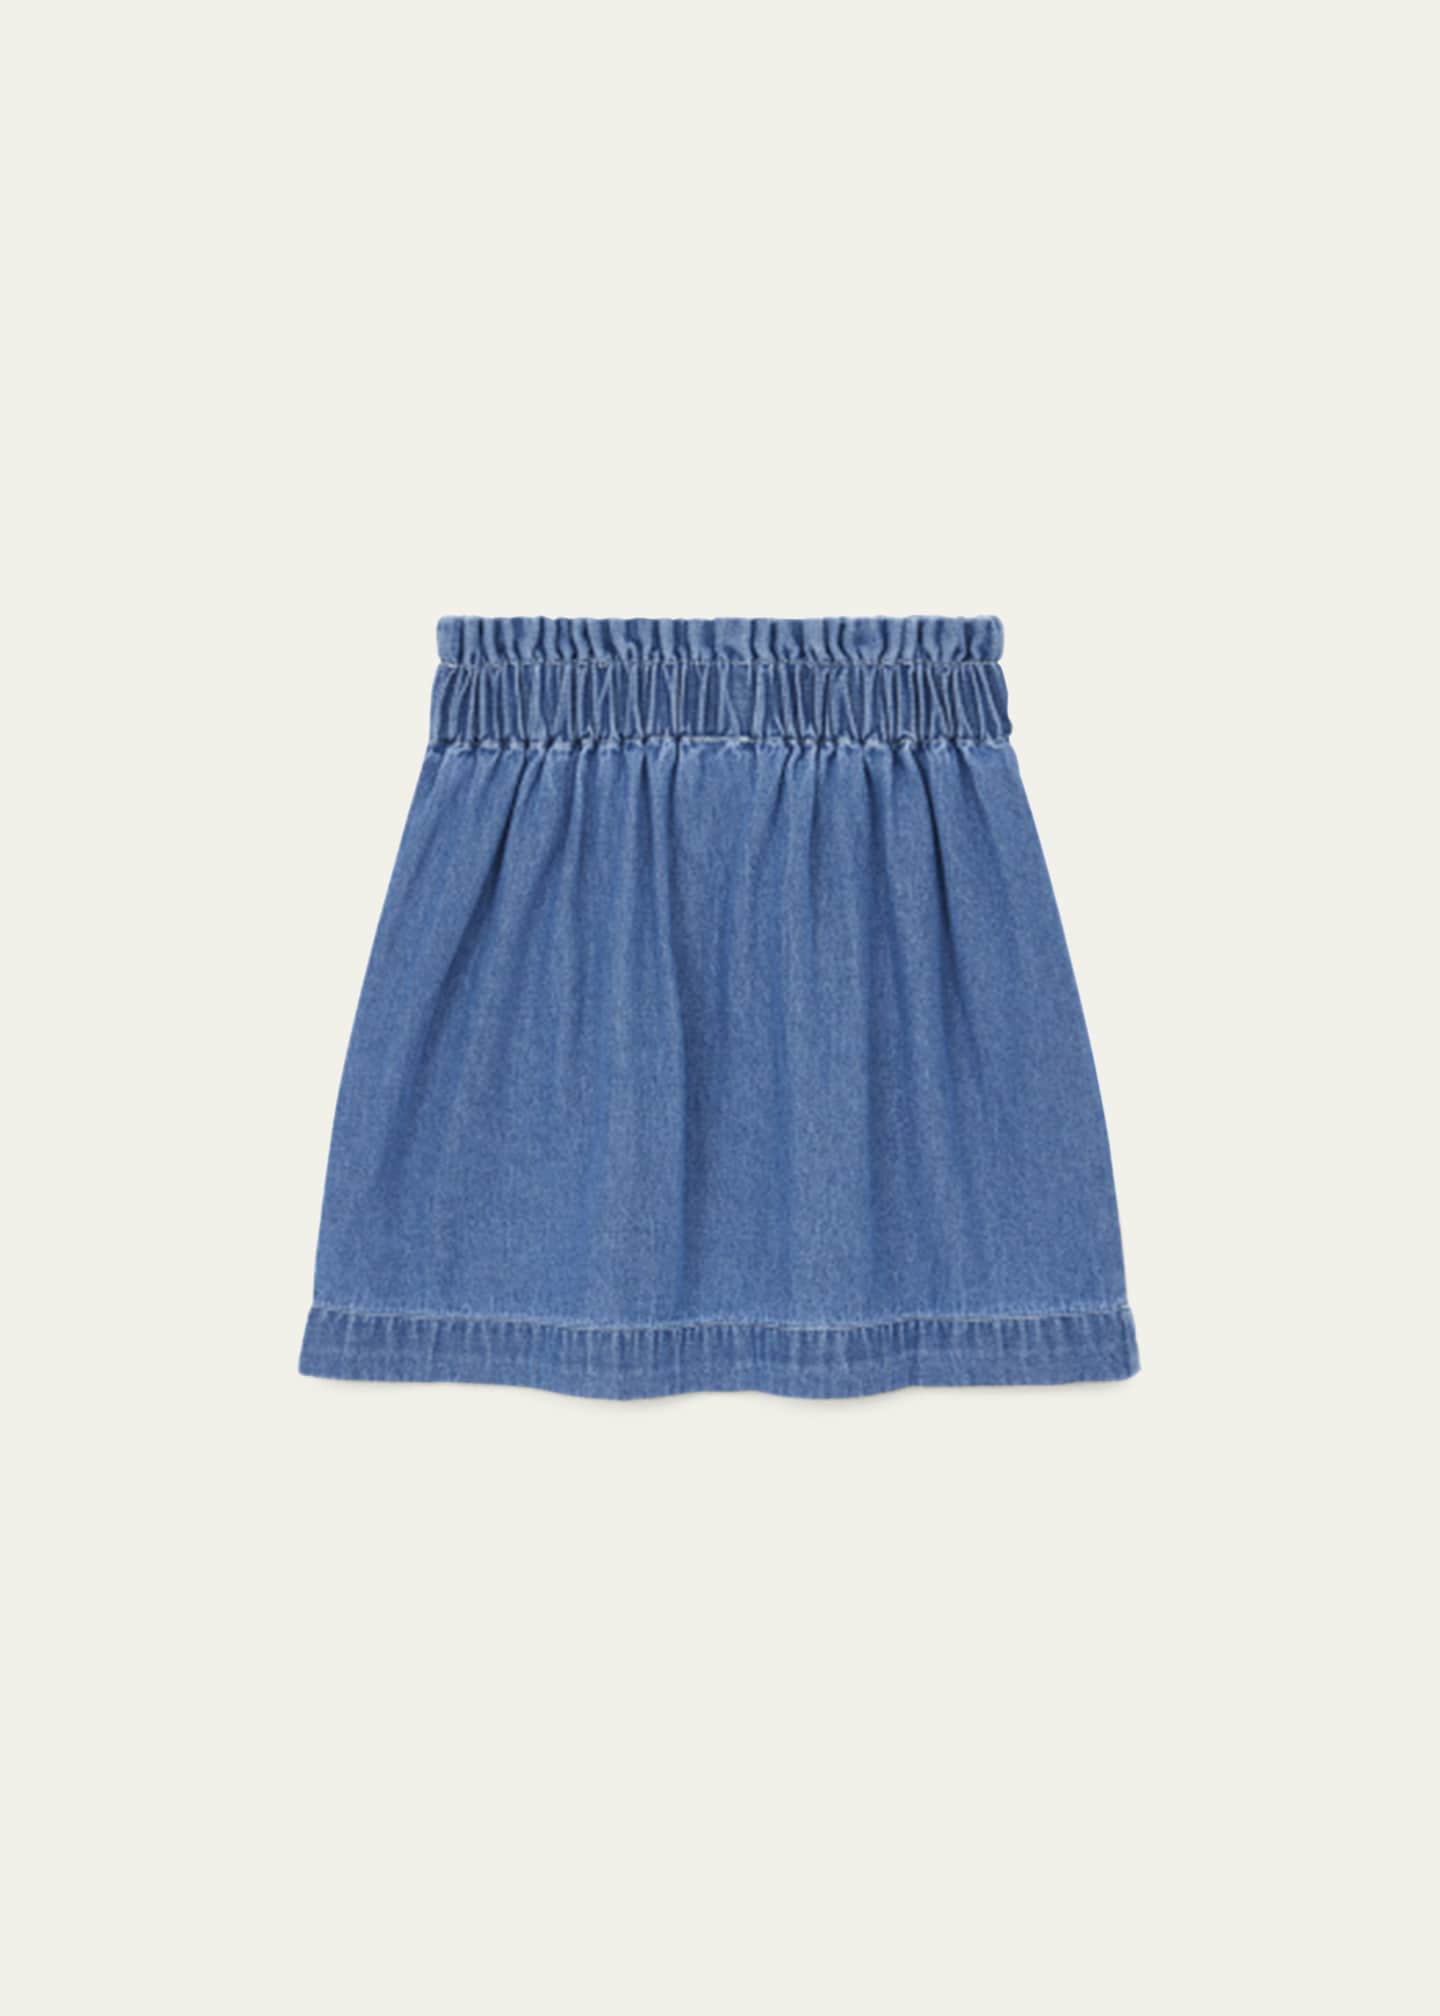 Bonton Girl's Douchka Short Denim Skirt, Size 4-12 - Bergdorf Goodman